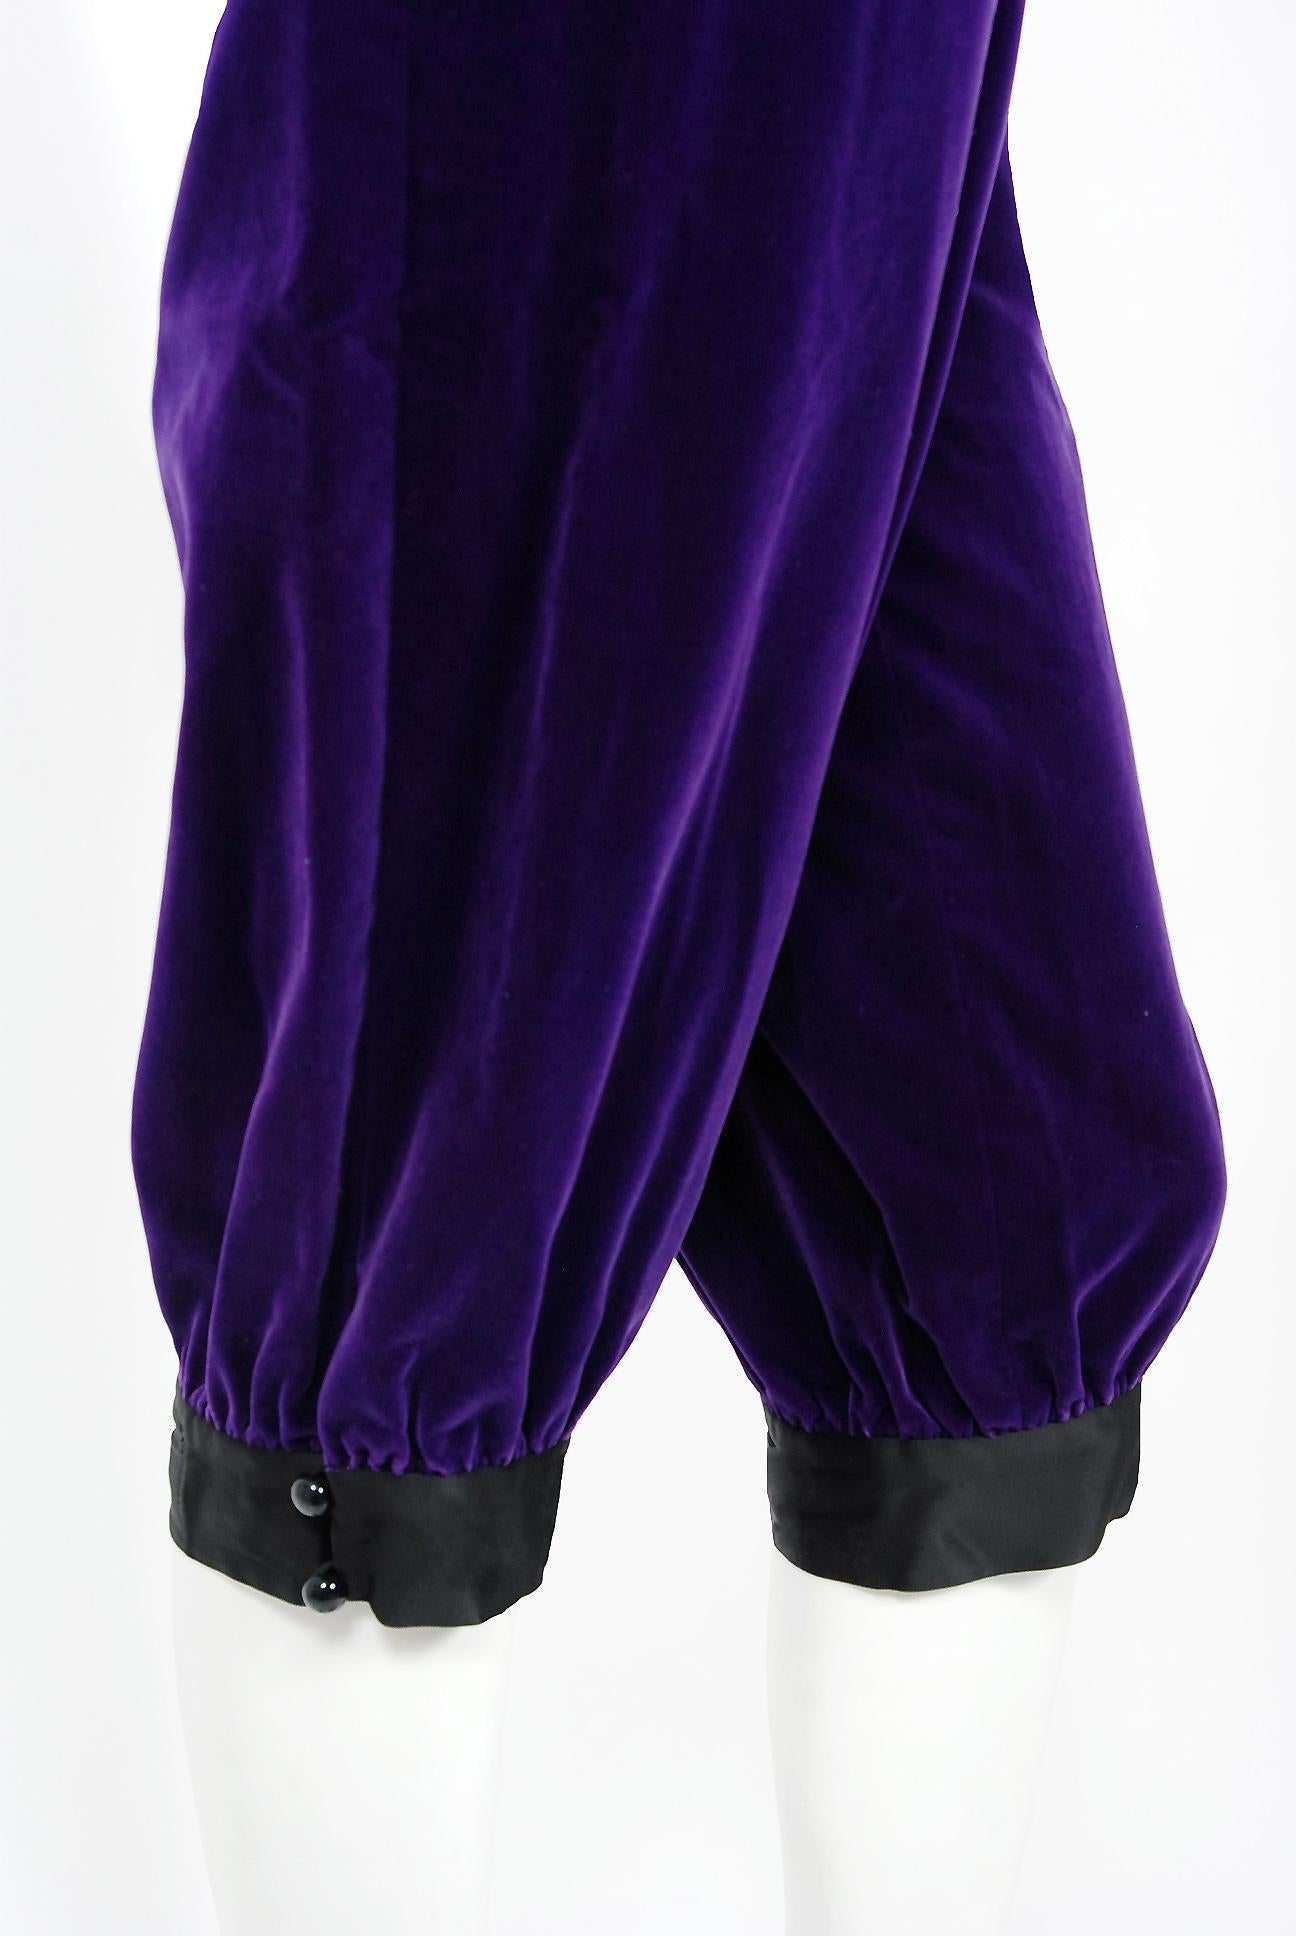 Vintage 1979 Yves Saint Laurent Documented Purple Velvet Jacket Knicker Pantsuit For Sale 1